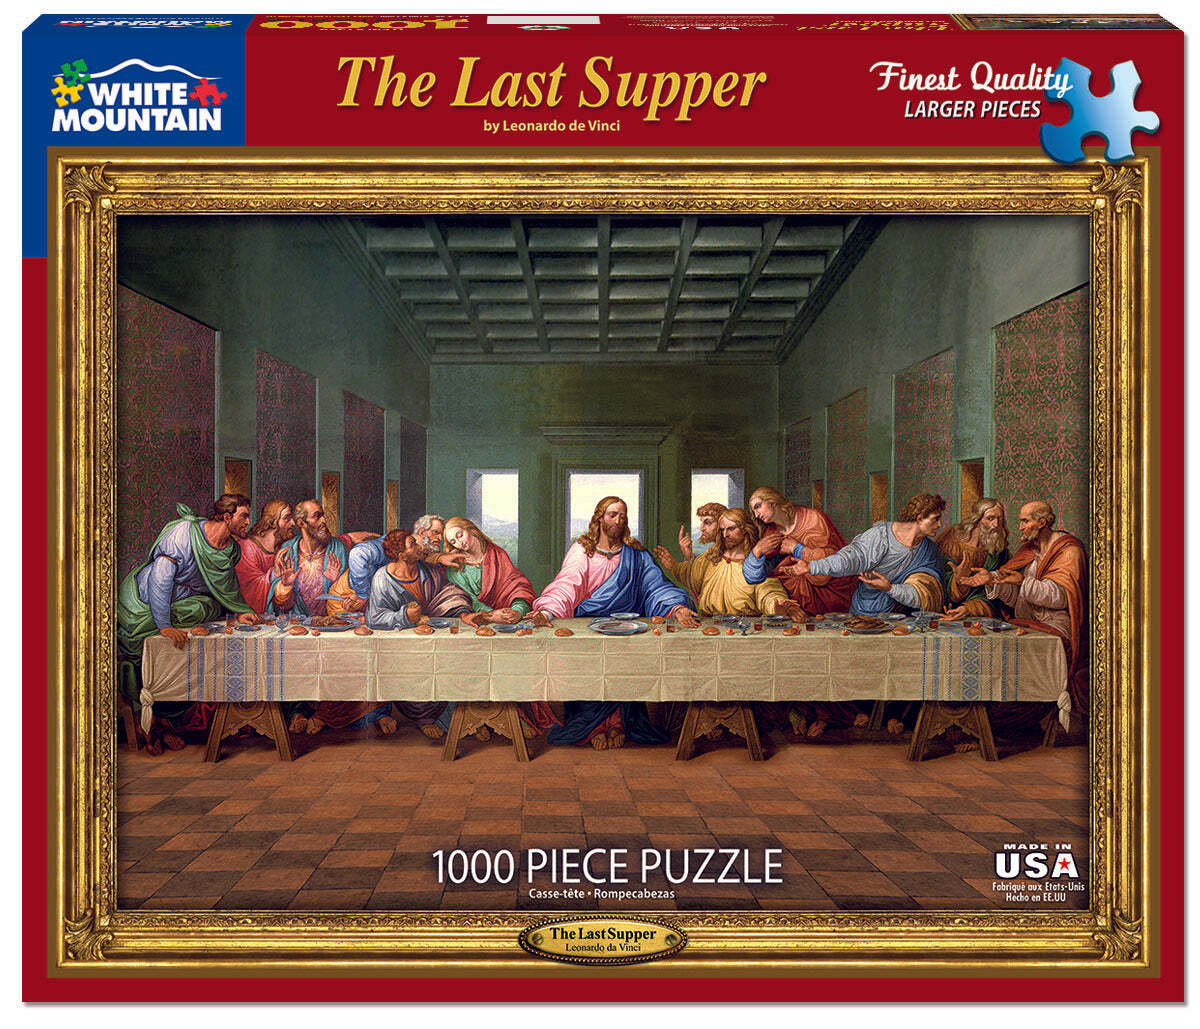 Last Supper (1524pz) - 1000 Piece Jigsaw Puzzle